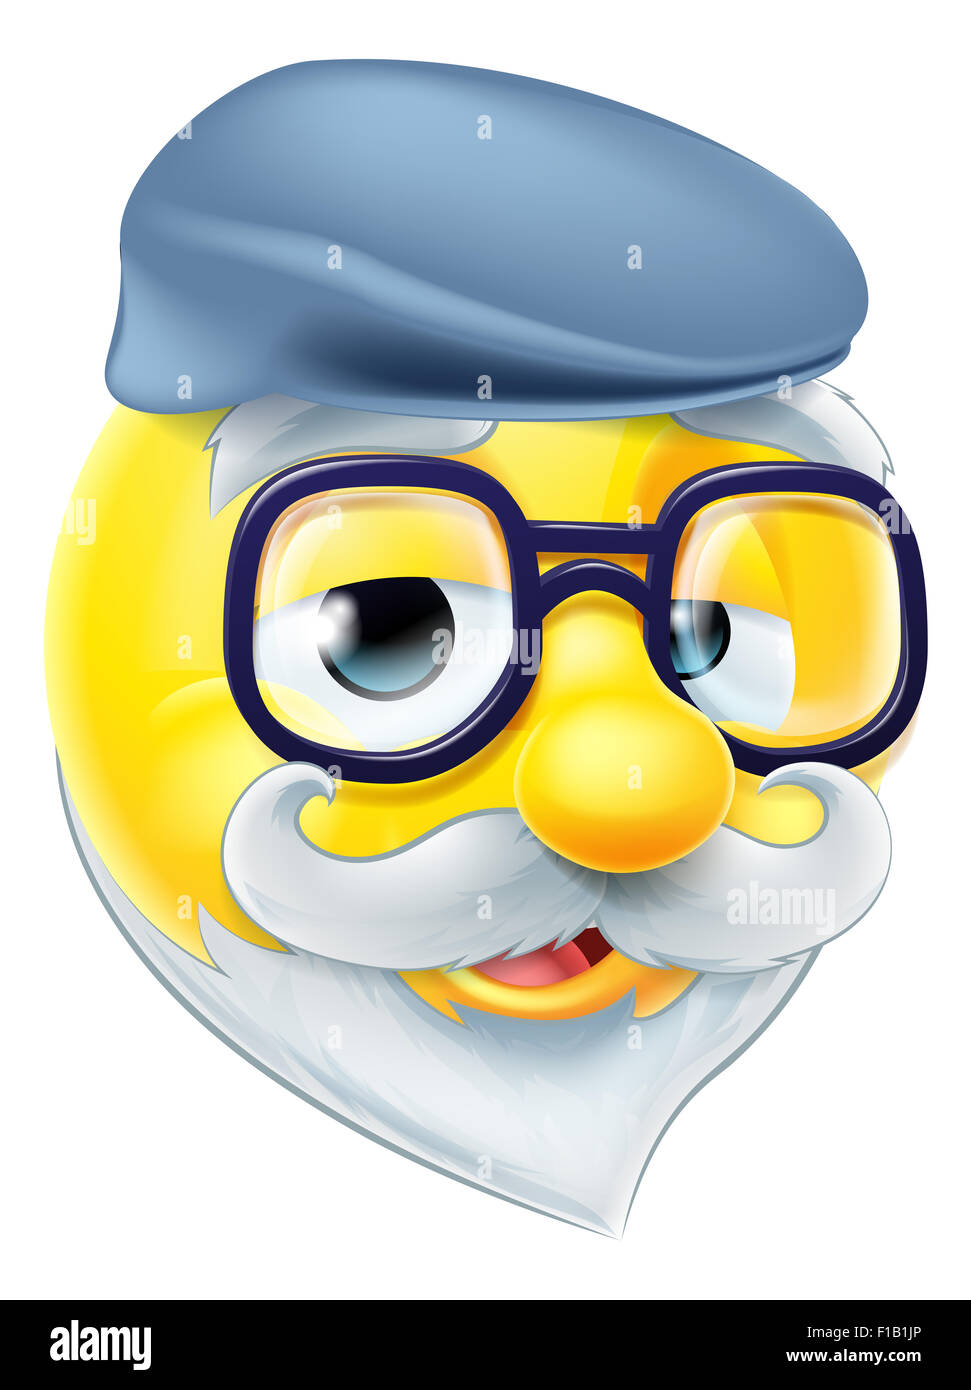 a senior citizen pensioner oap old man emoji emoticon character wearing F1B1JP